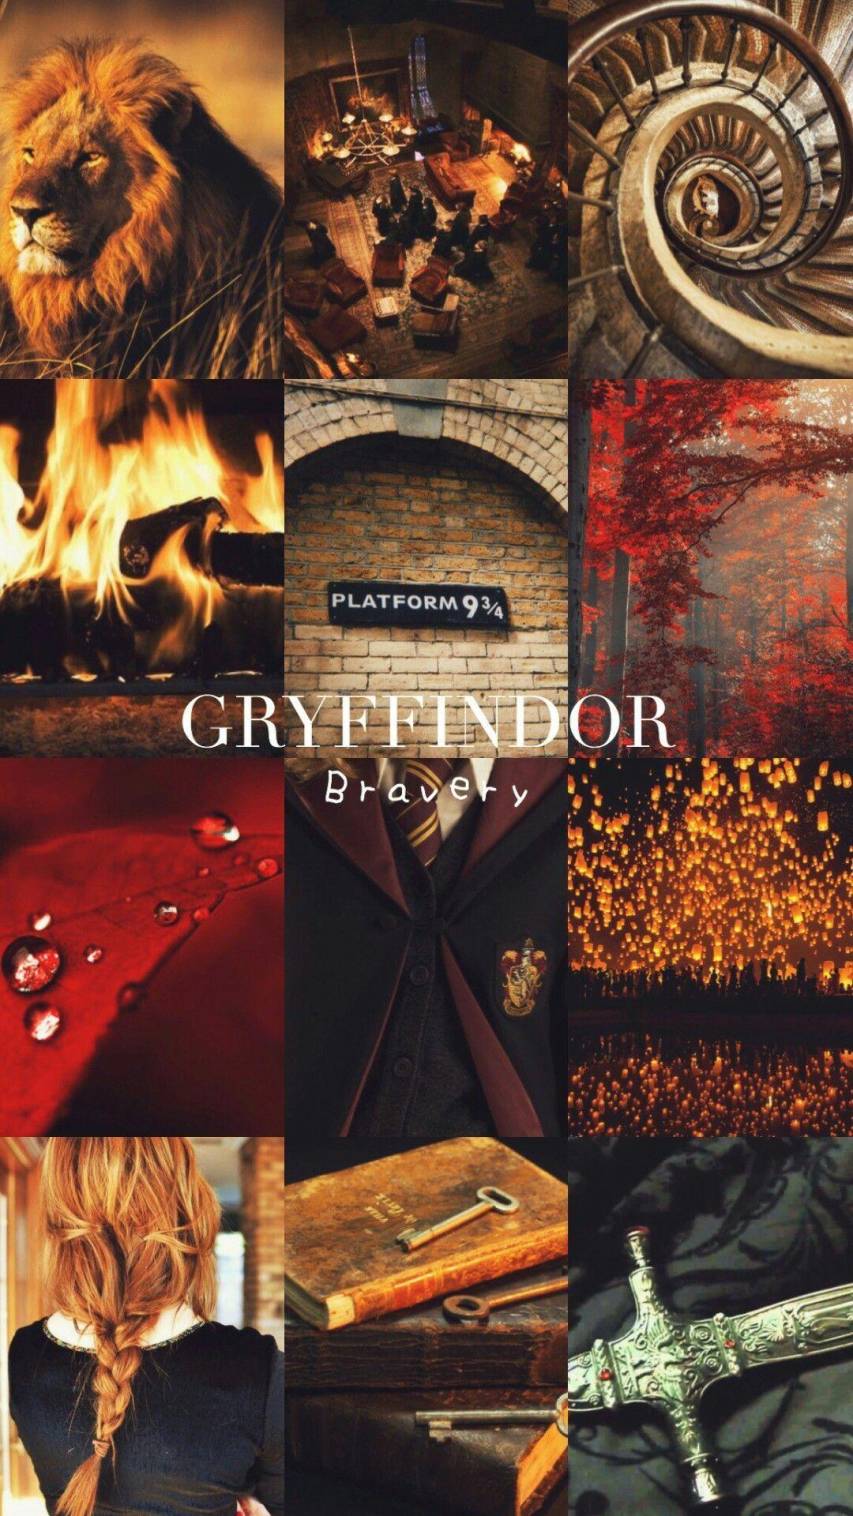 42+] Gryffindor Wallpaper HD - WallpaperSafari